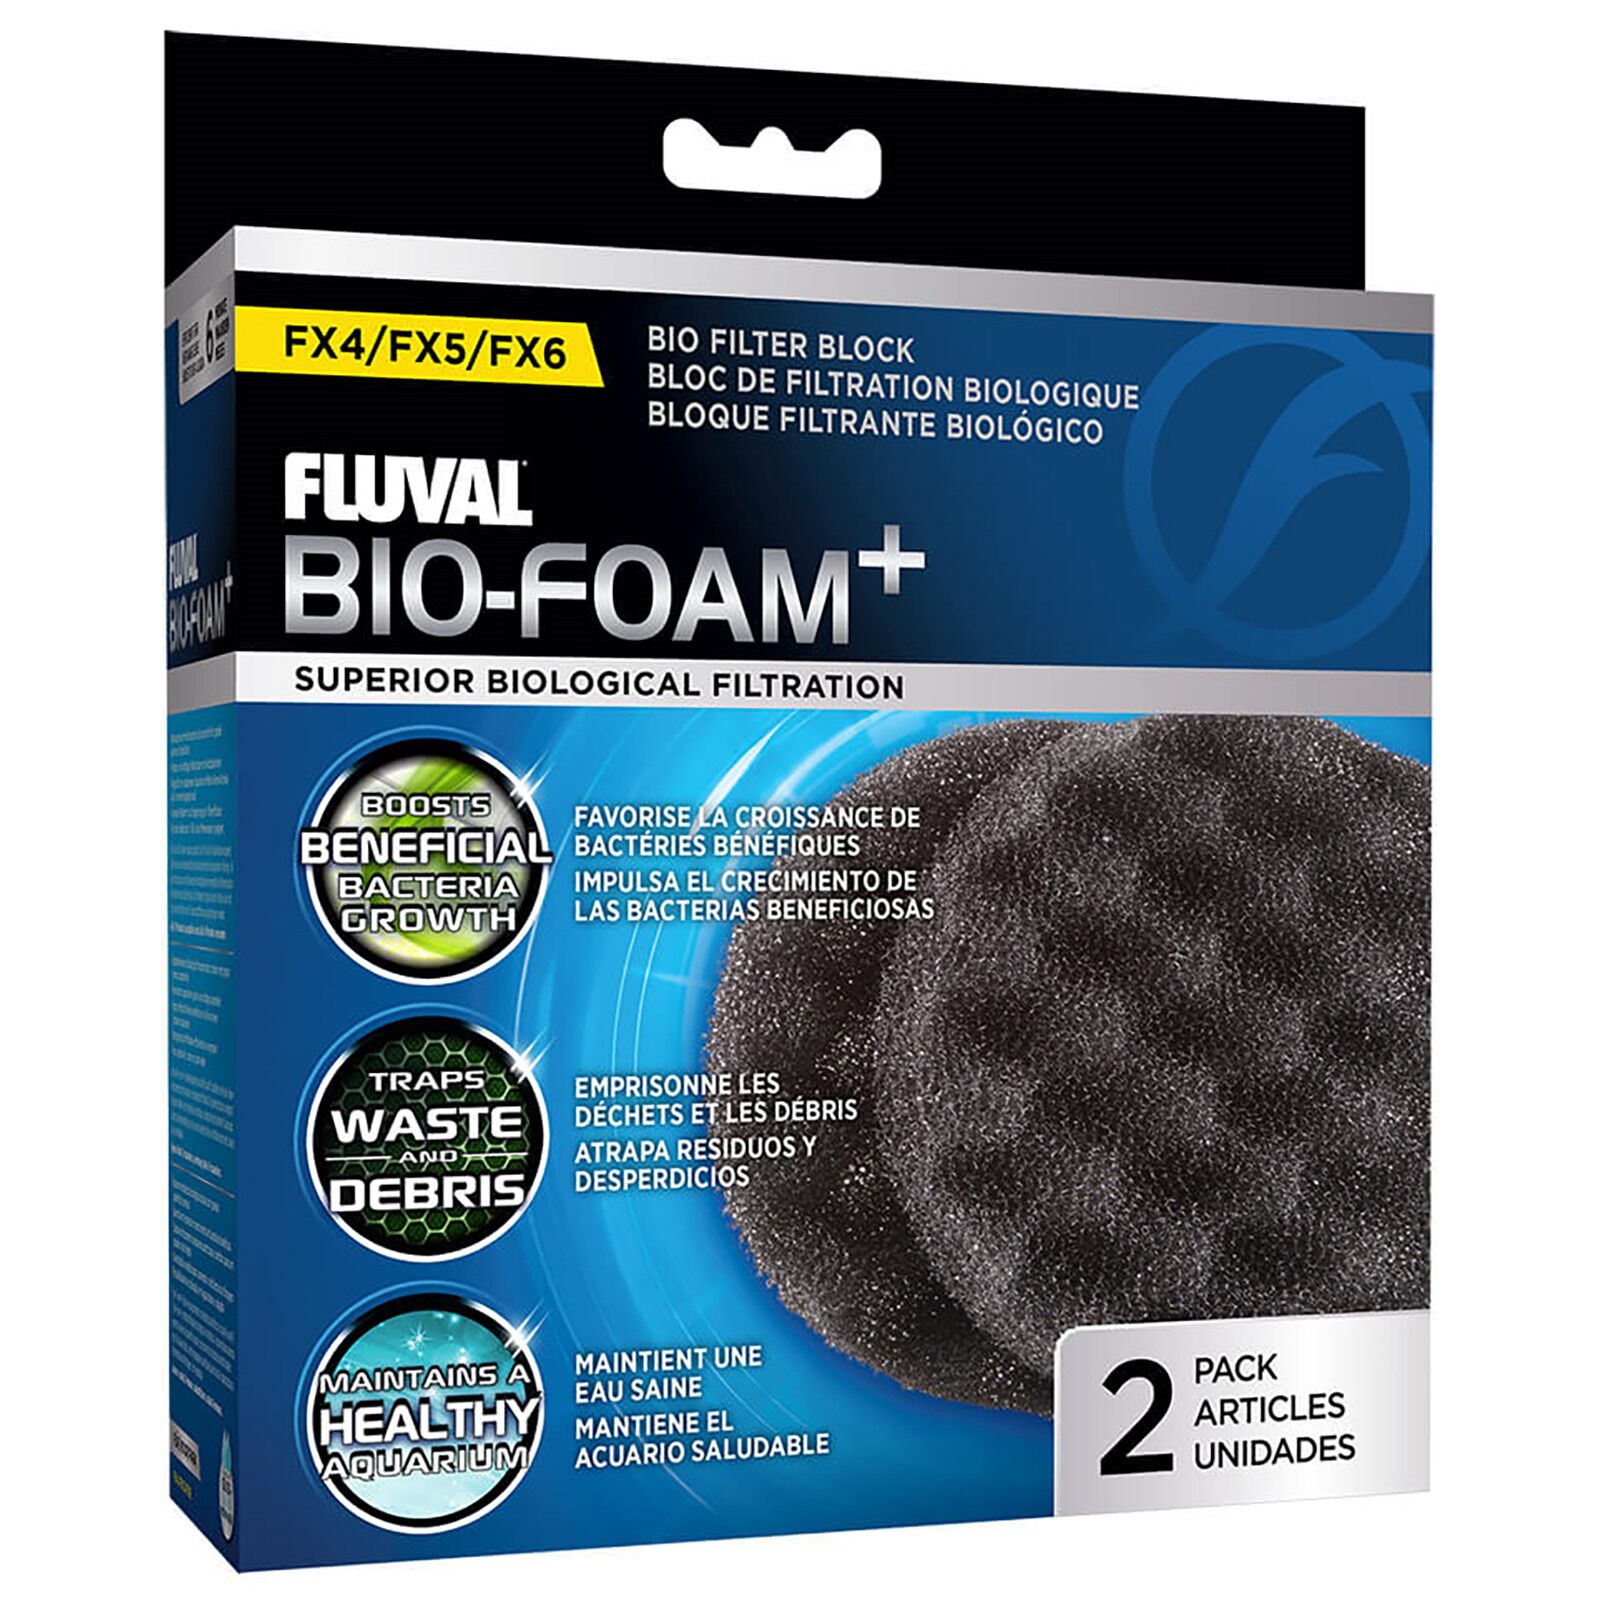 Fluval - Bio-Foam+ FX